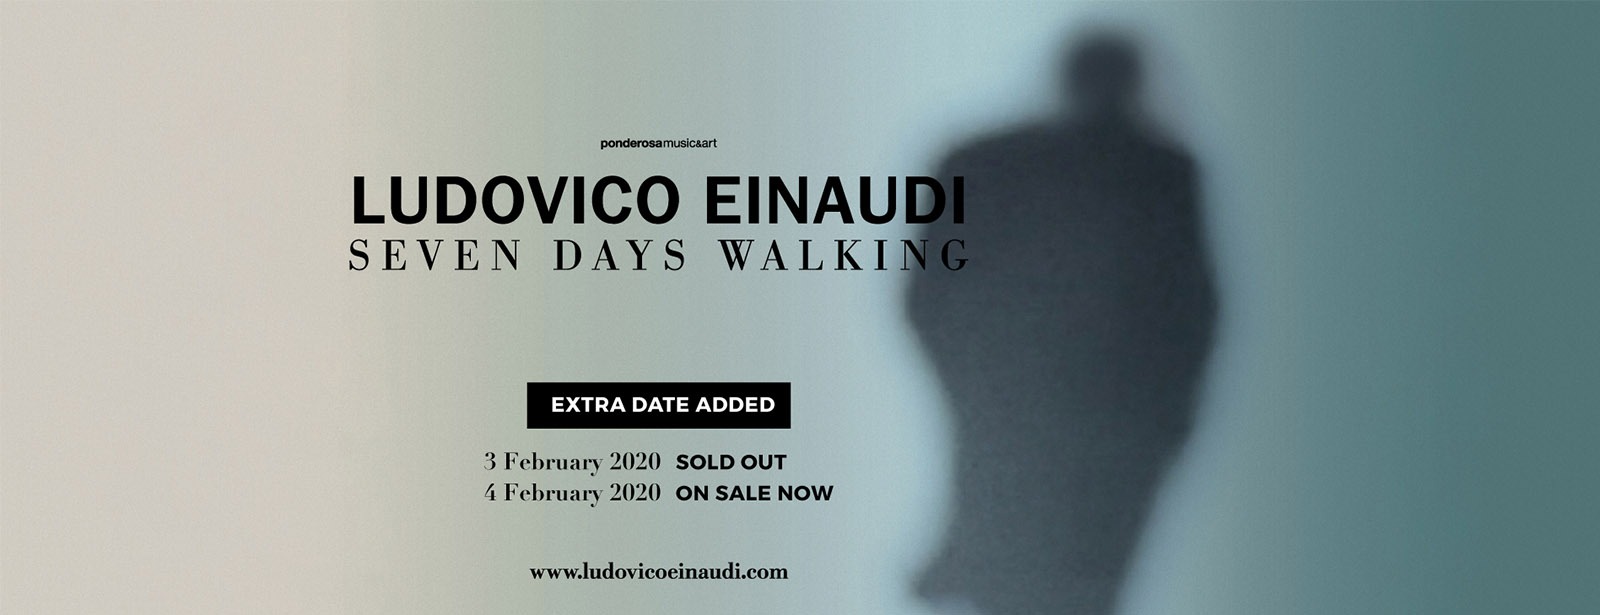 Ludovico Einaudi Seven Days Walking at Dubai Opera - Coming Soon in UAE